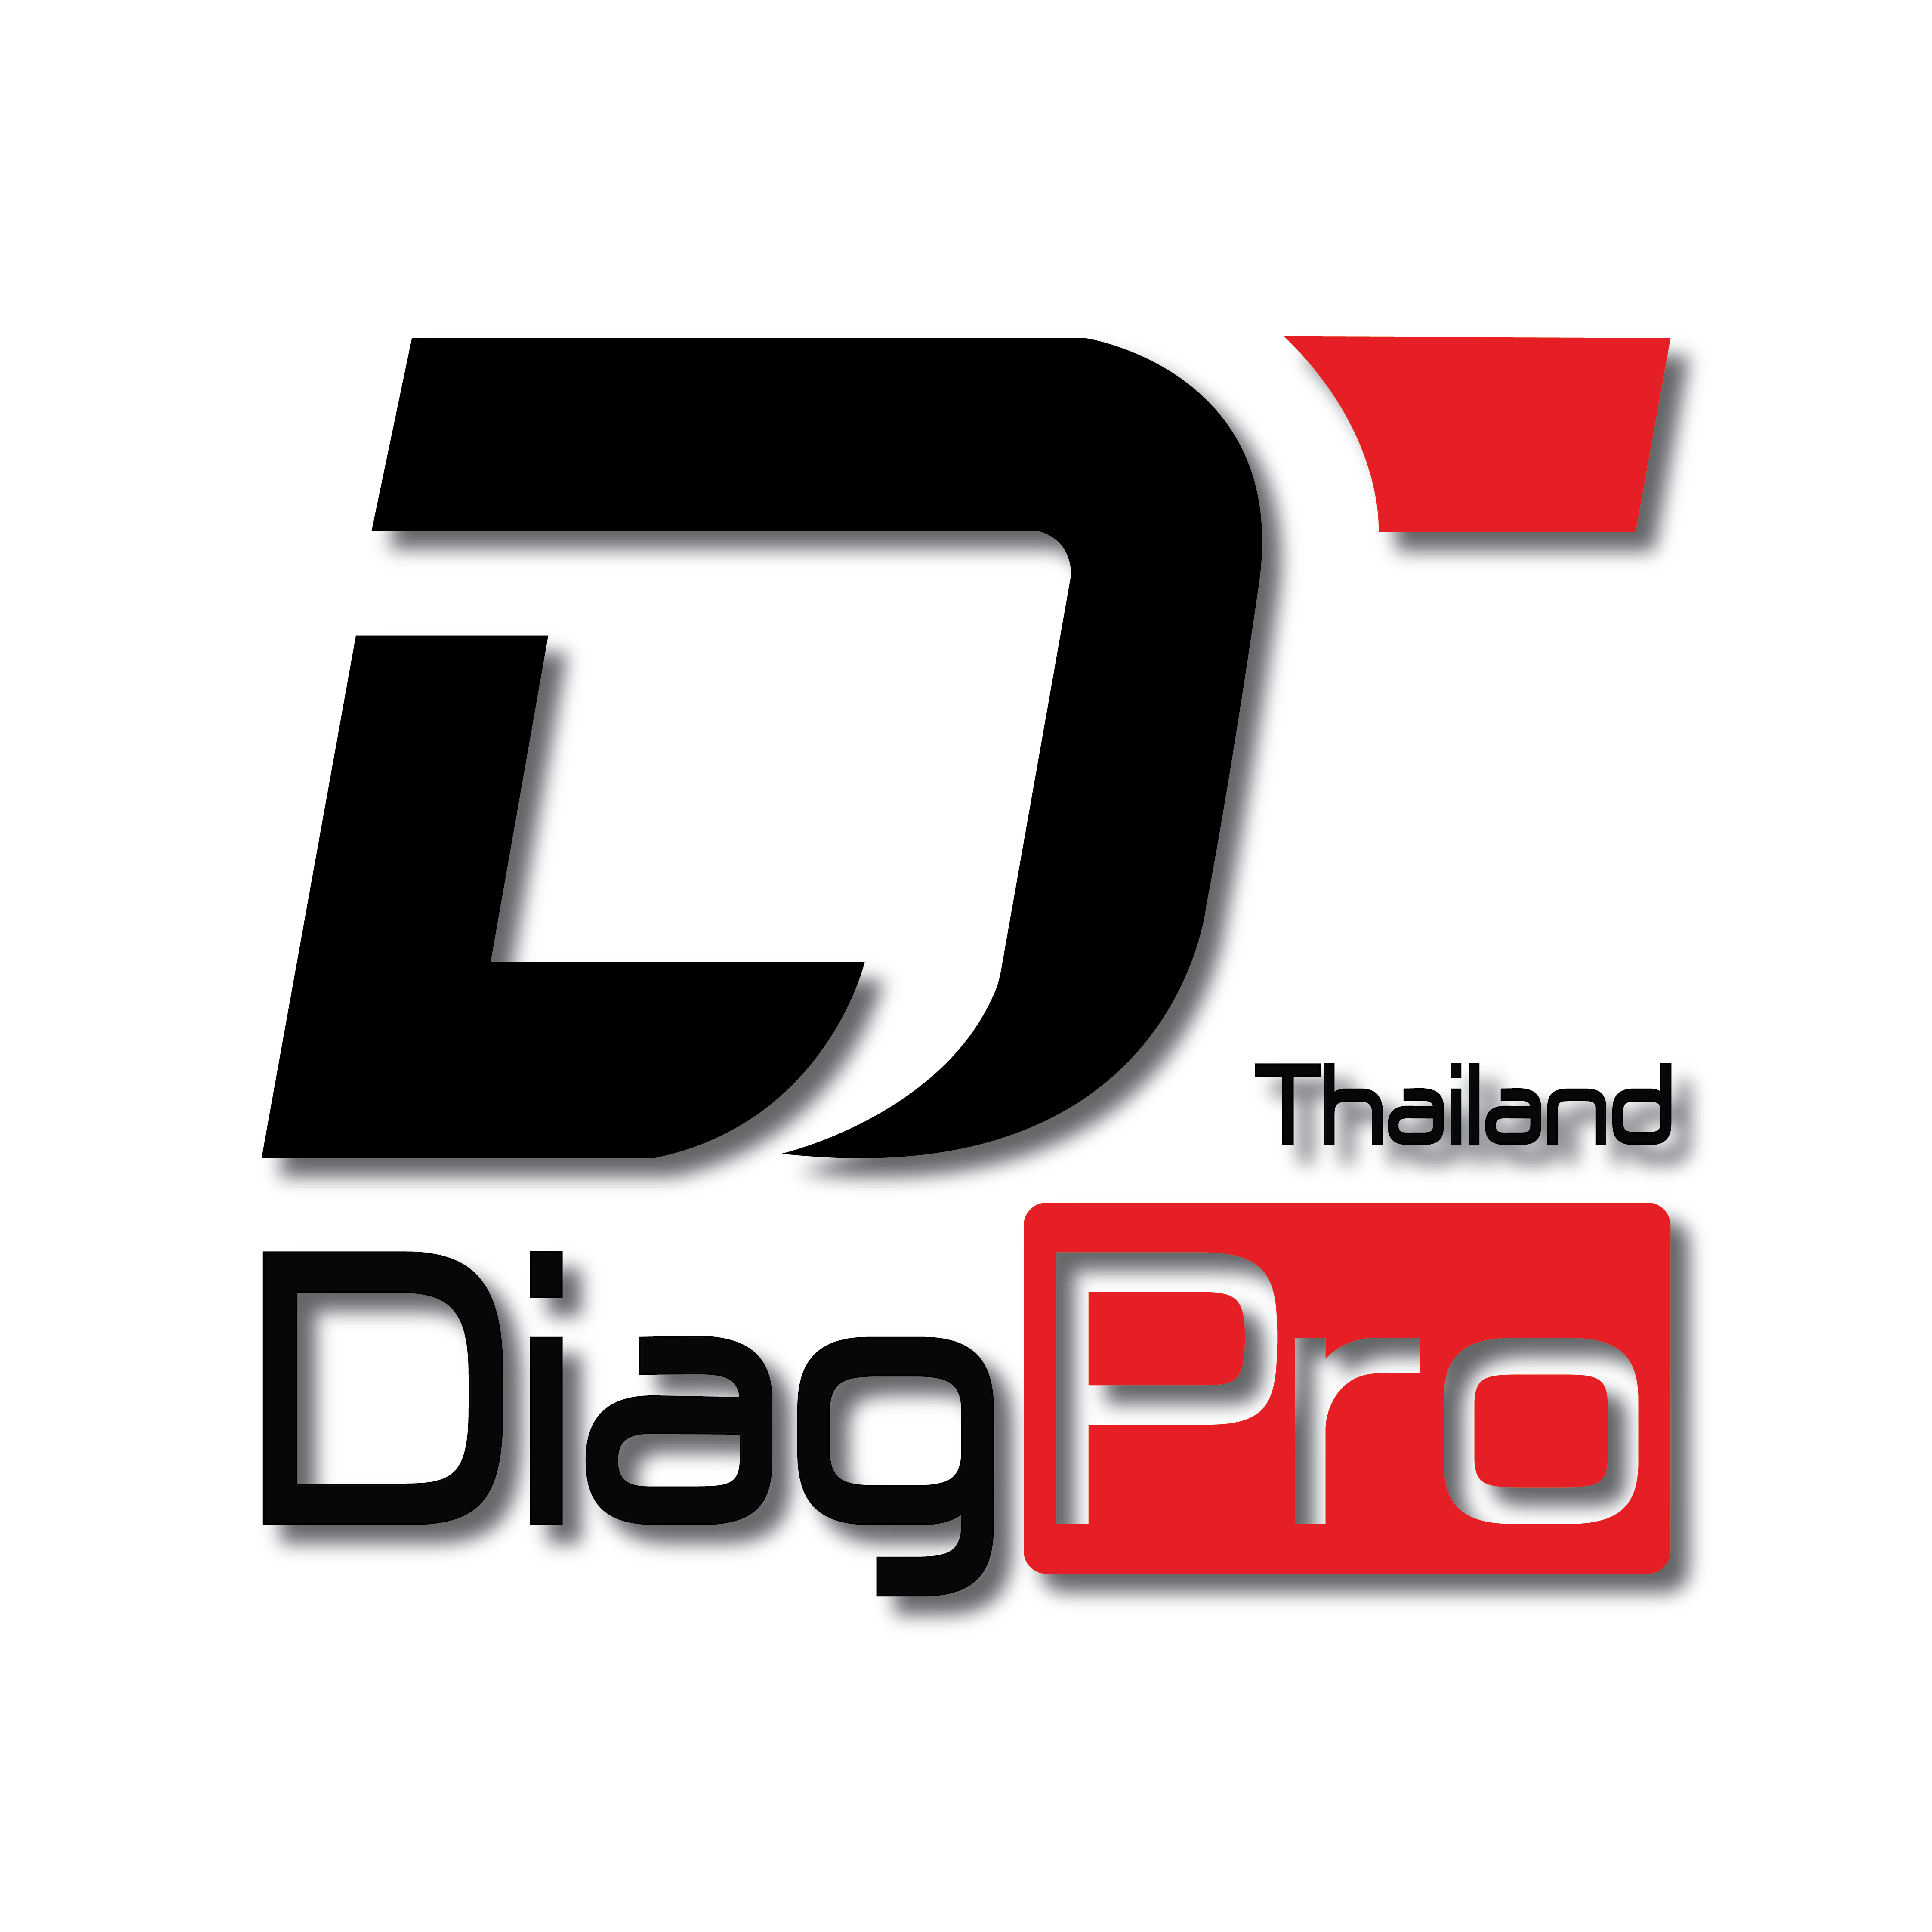 Diagprothailand